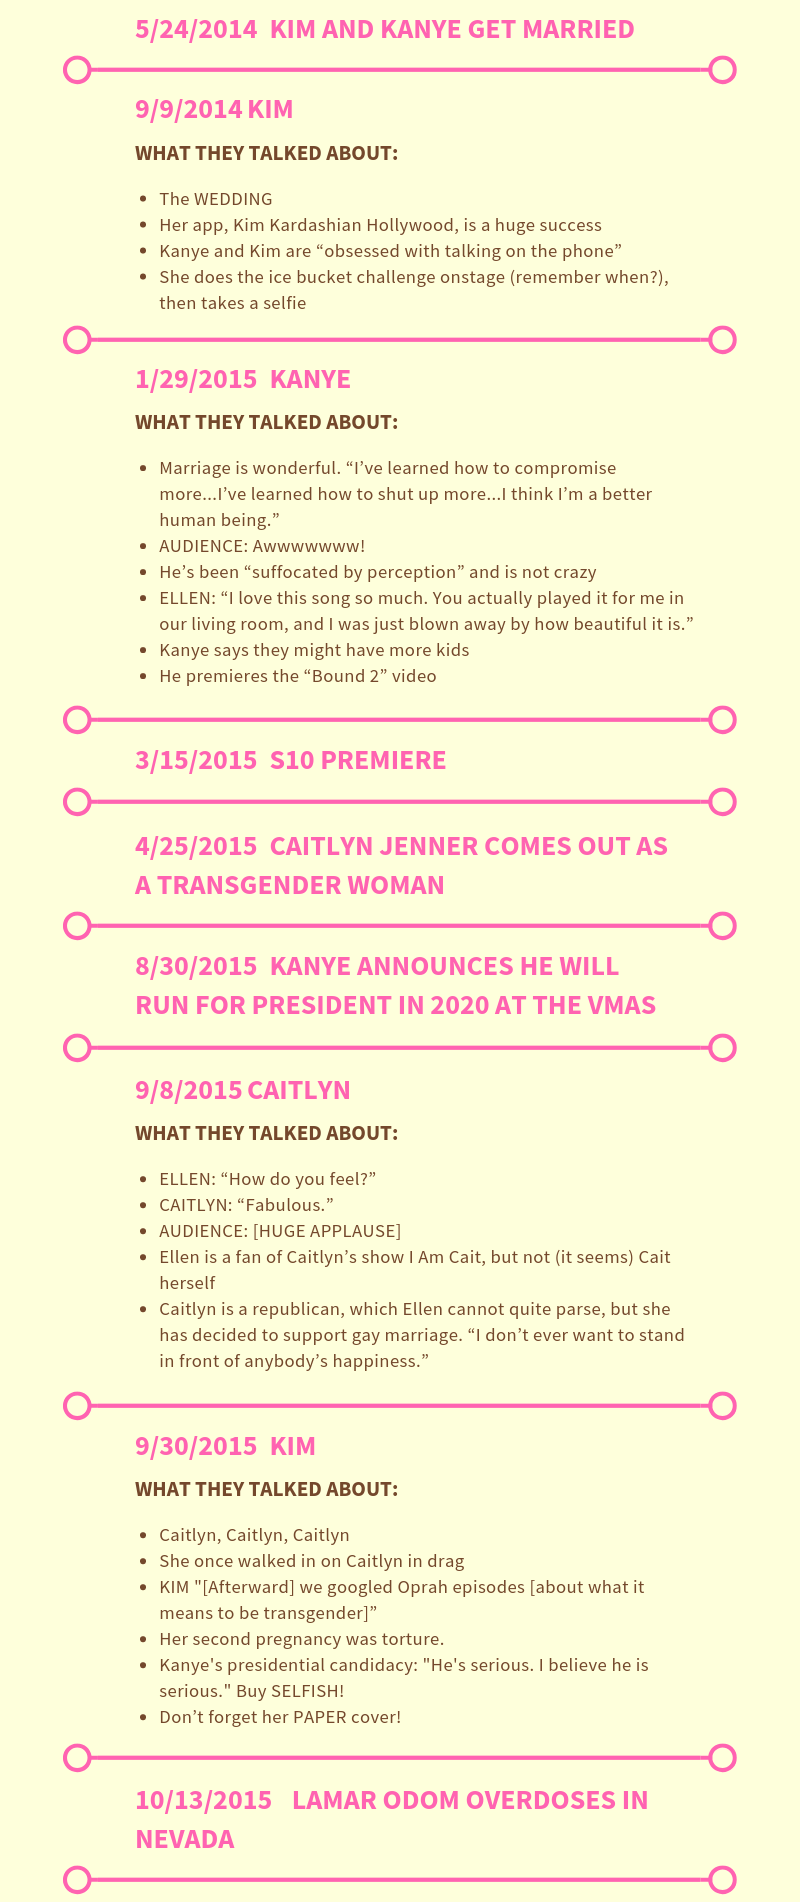 a timeline of kardashian family appearances on ellen